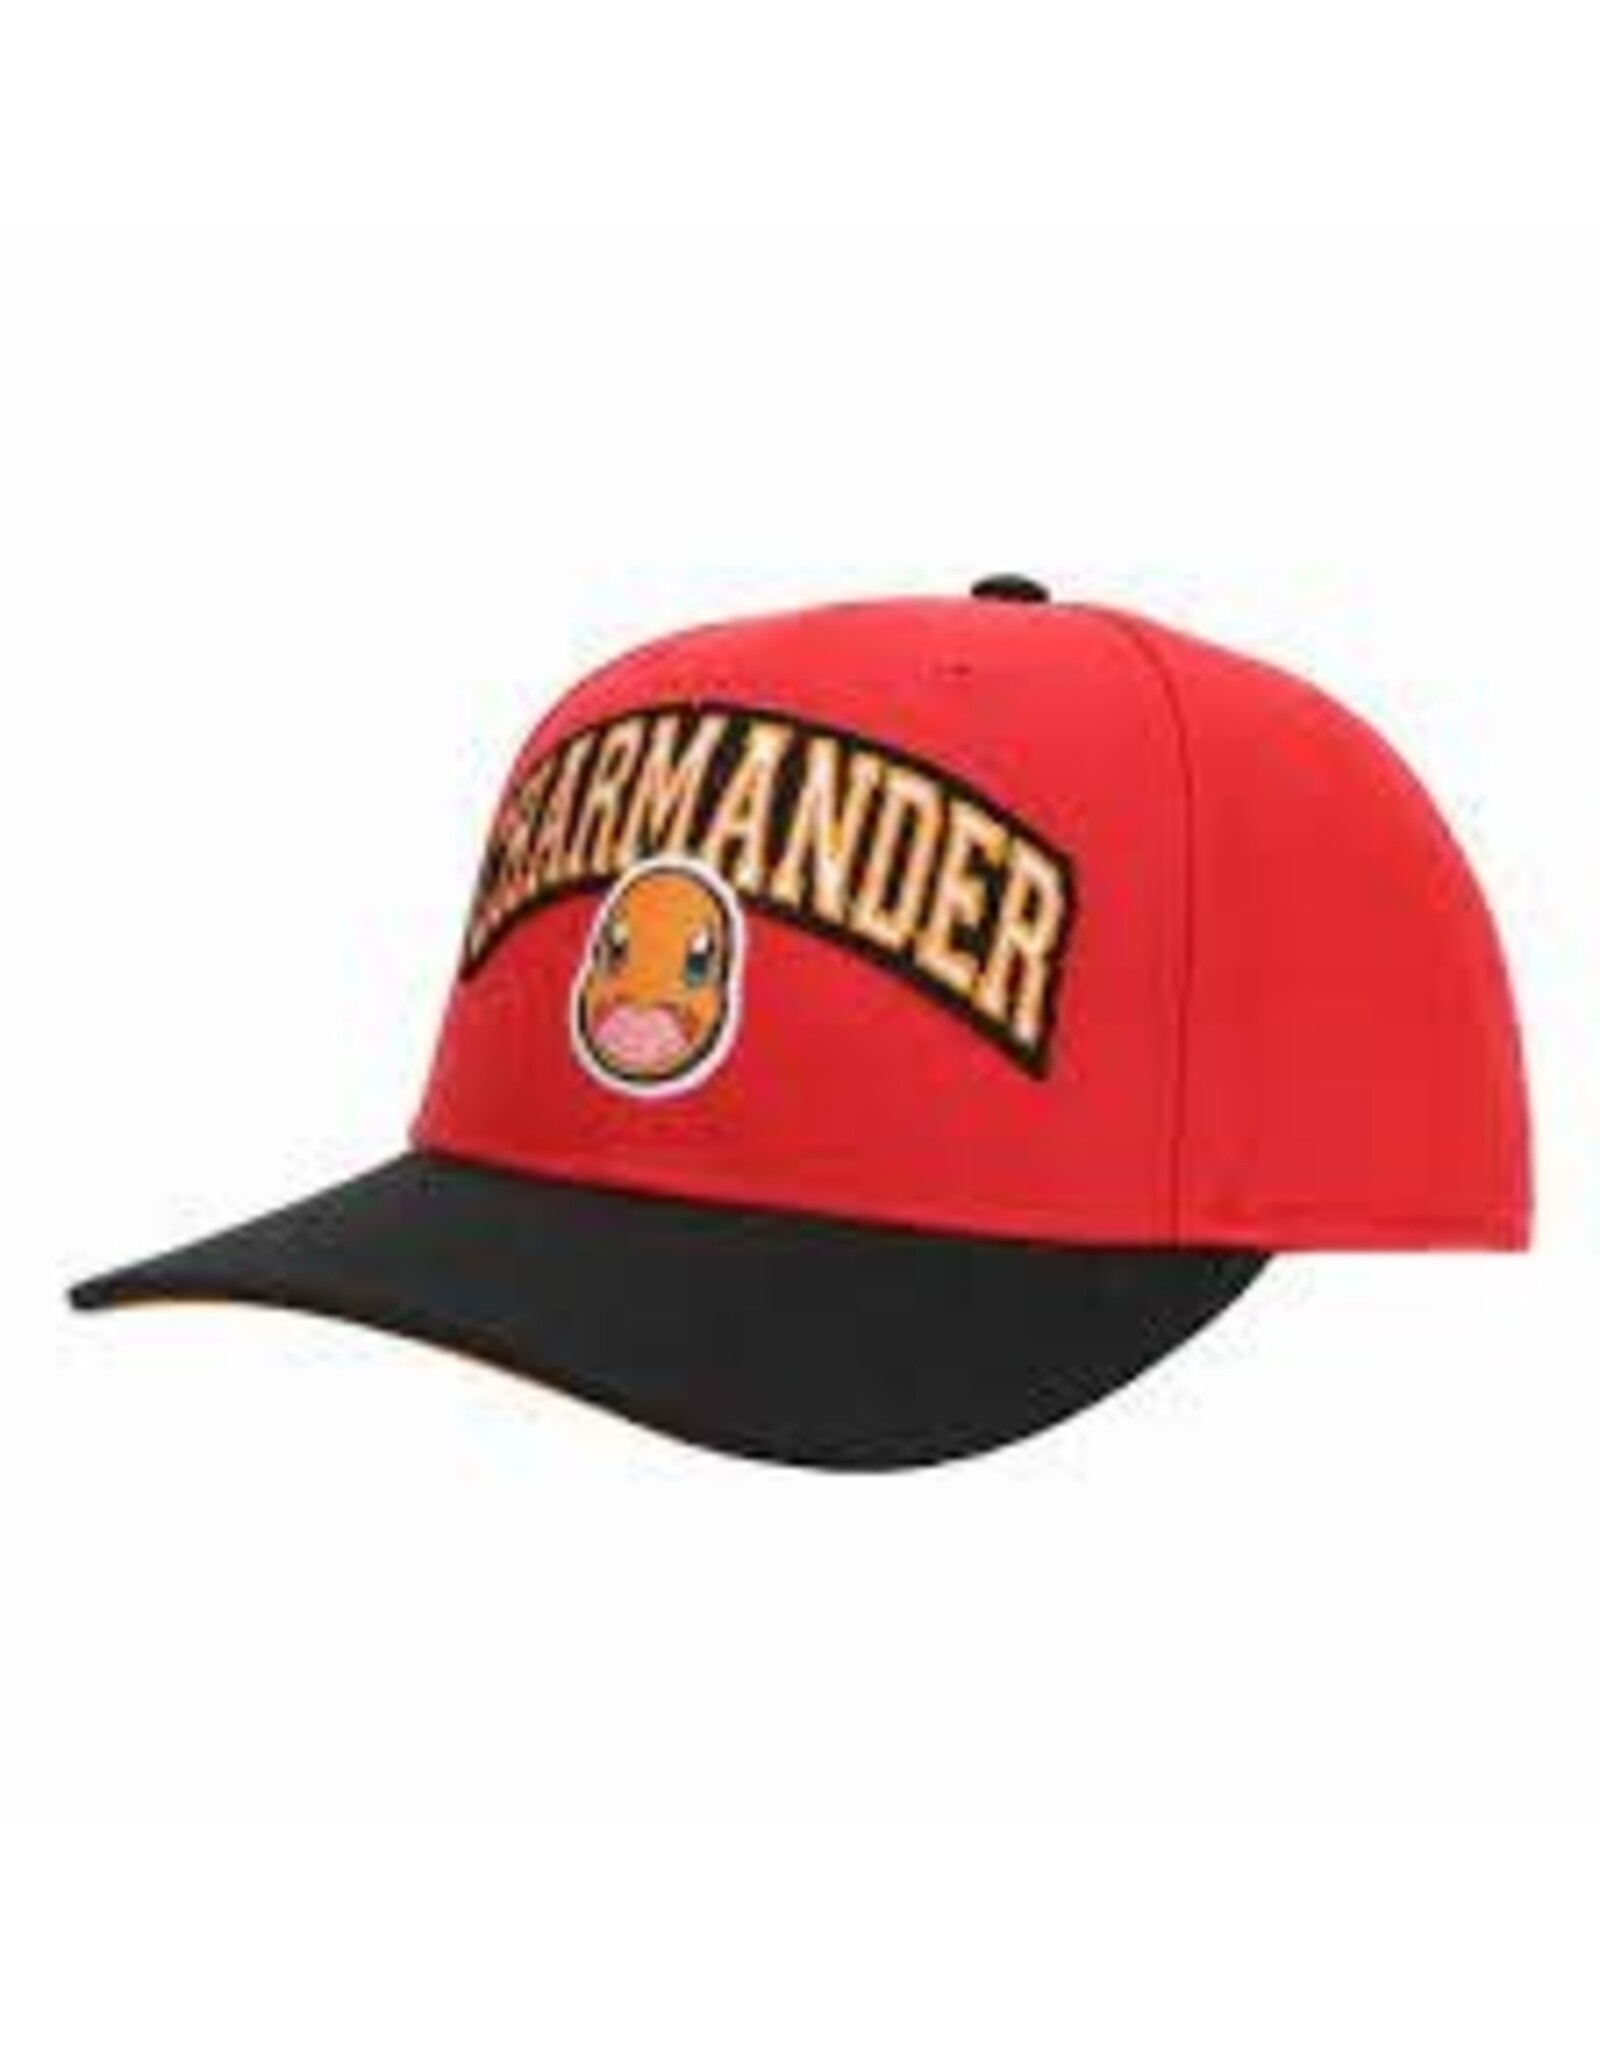 Bioworld Charmander Snap Back Hat